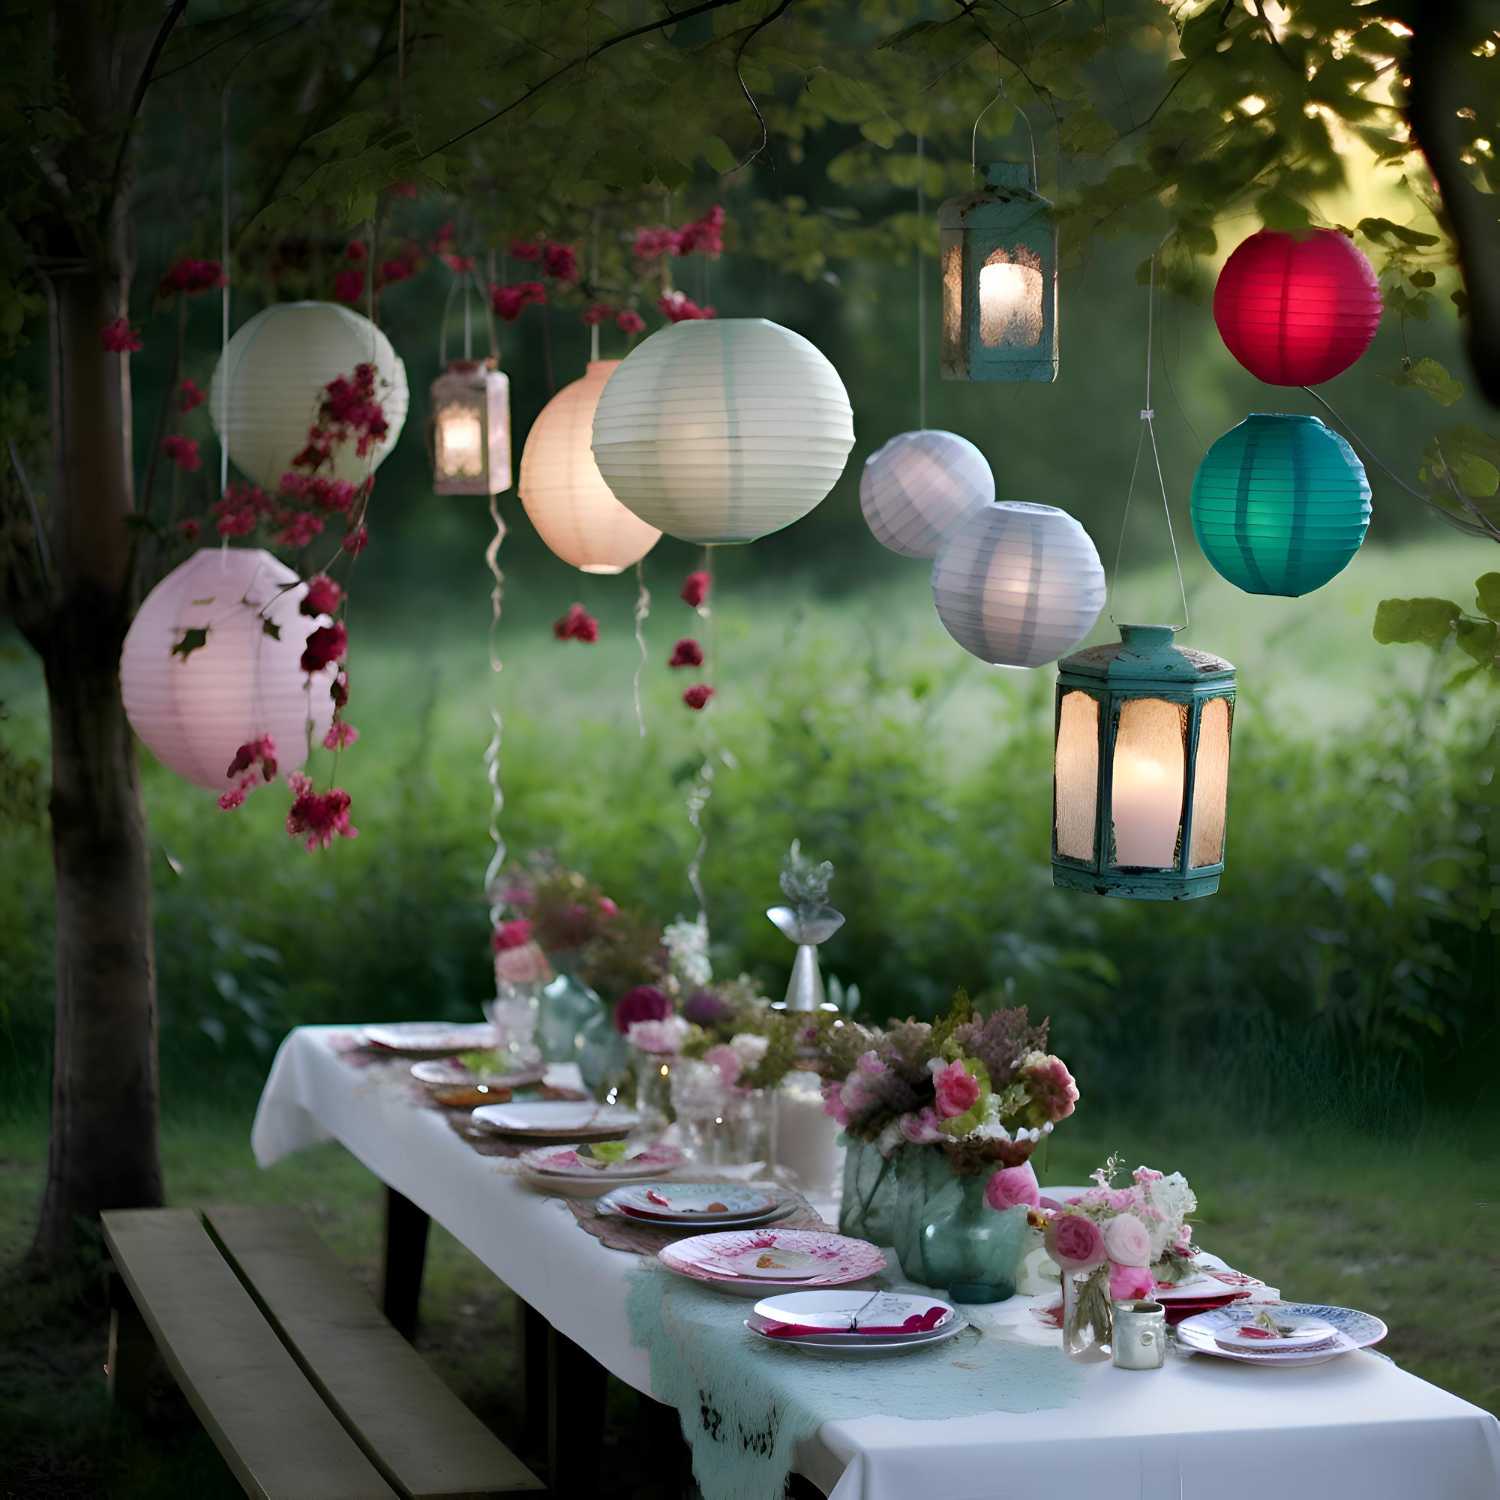 Vintage Garden Party Decoraitons with paper lanterns